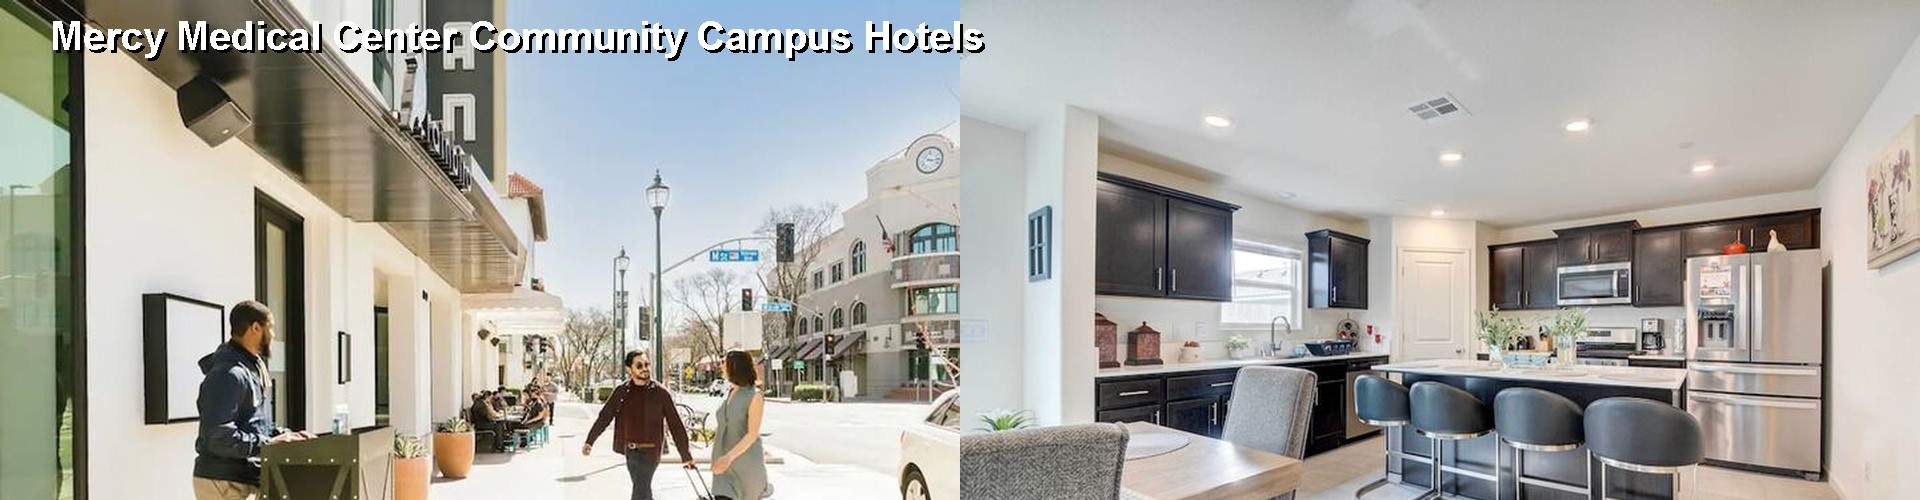 2 Best Hotels near Mercy Medical Center Community Campus